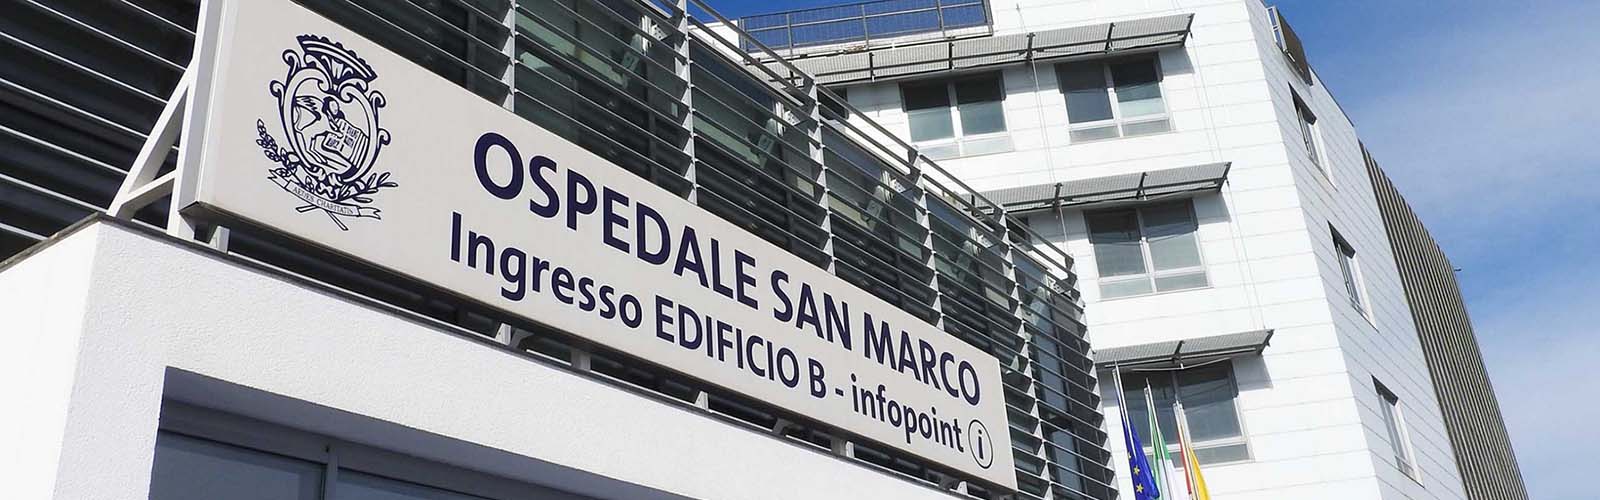 Ospedale San Marco - Catania